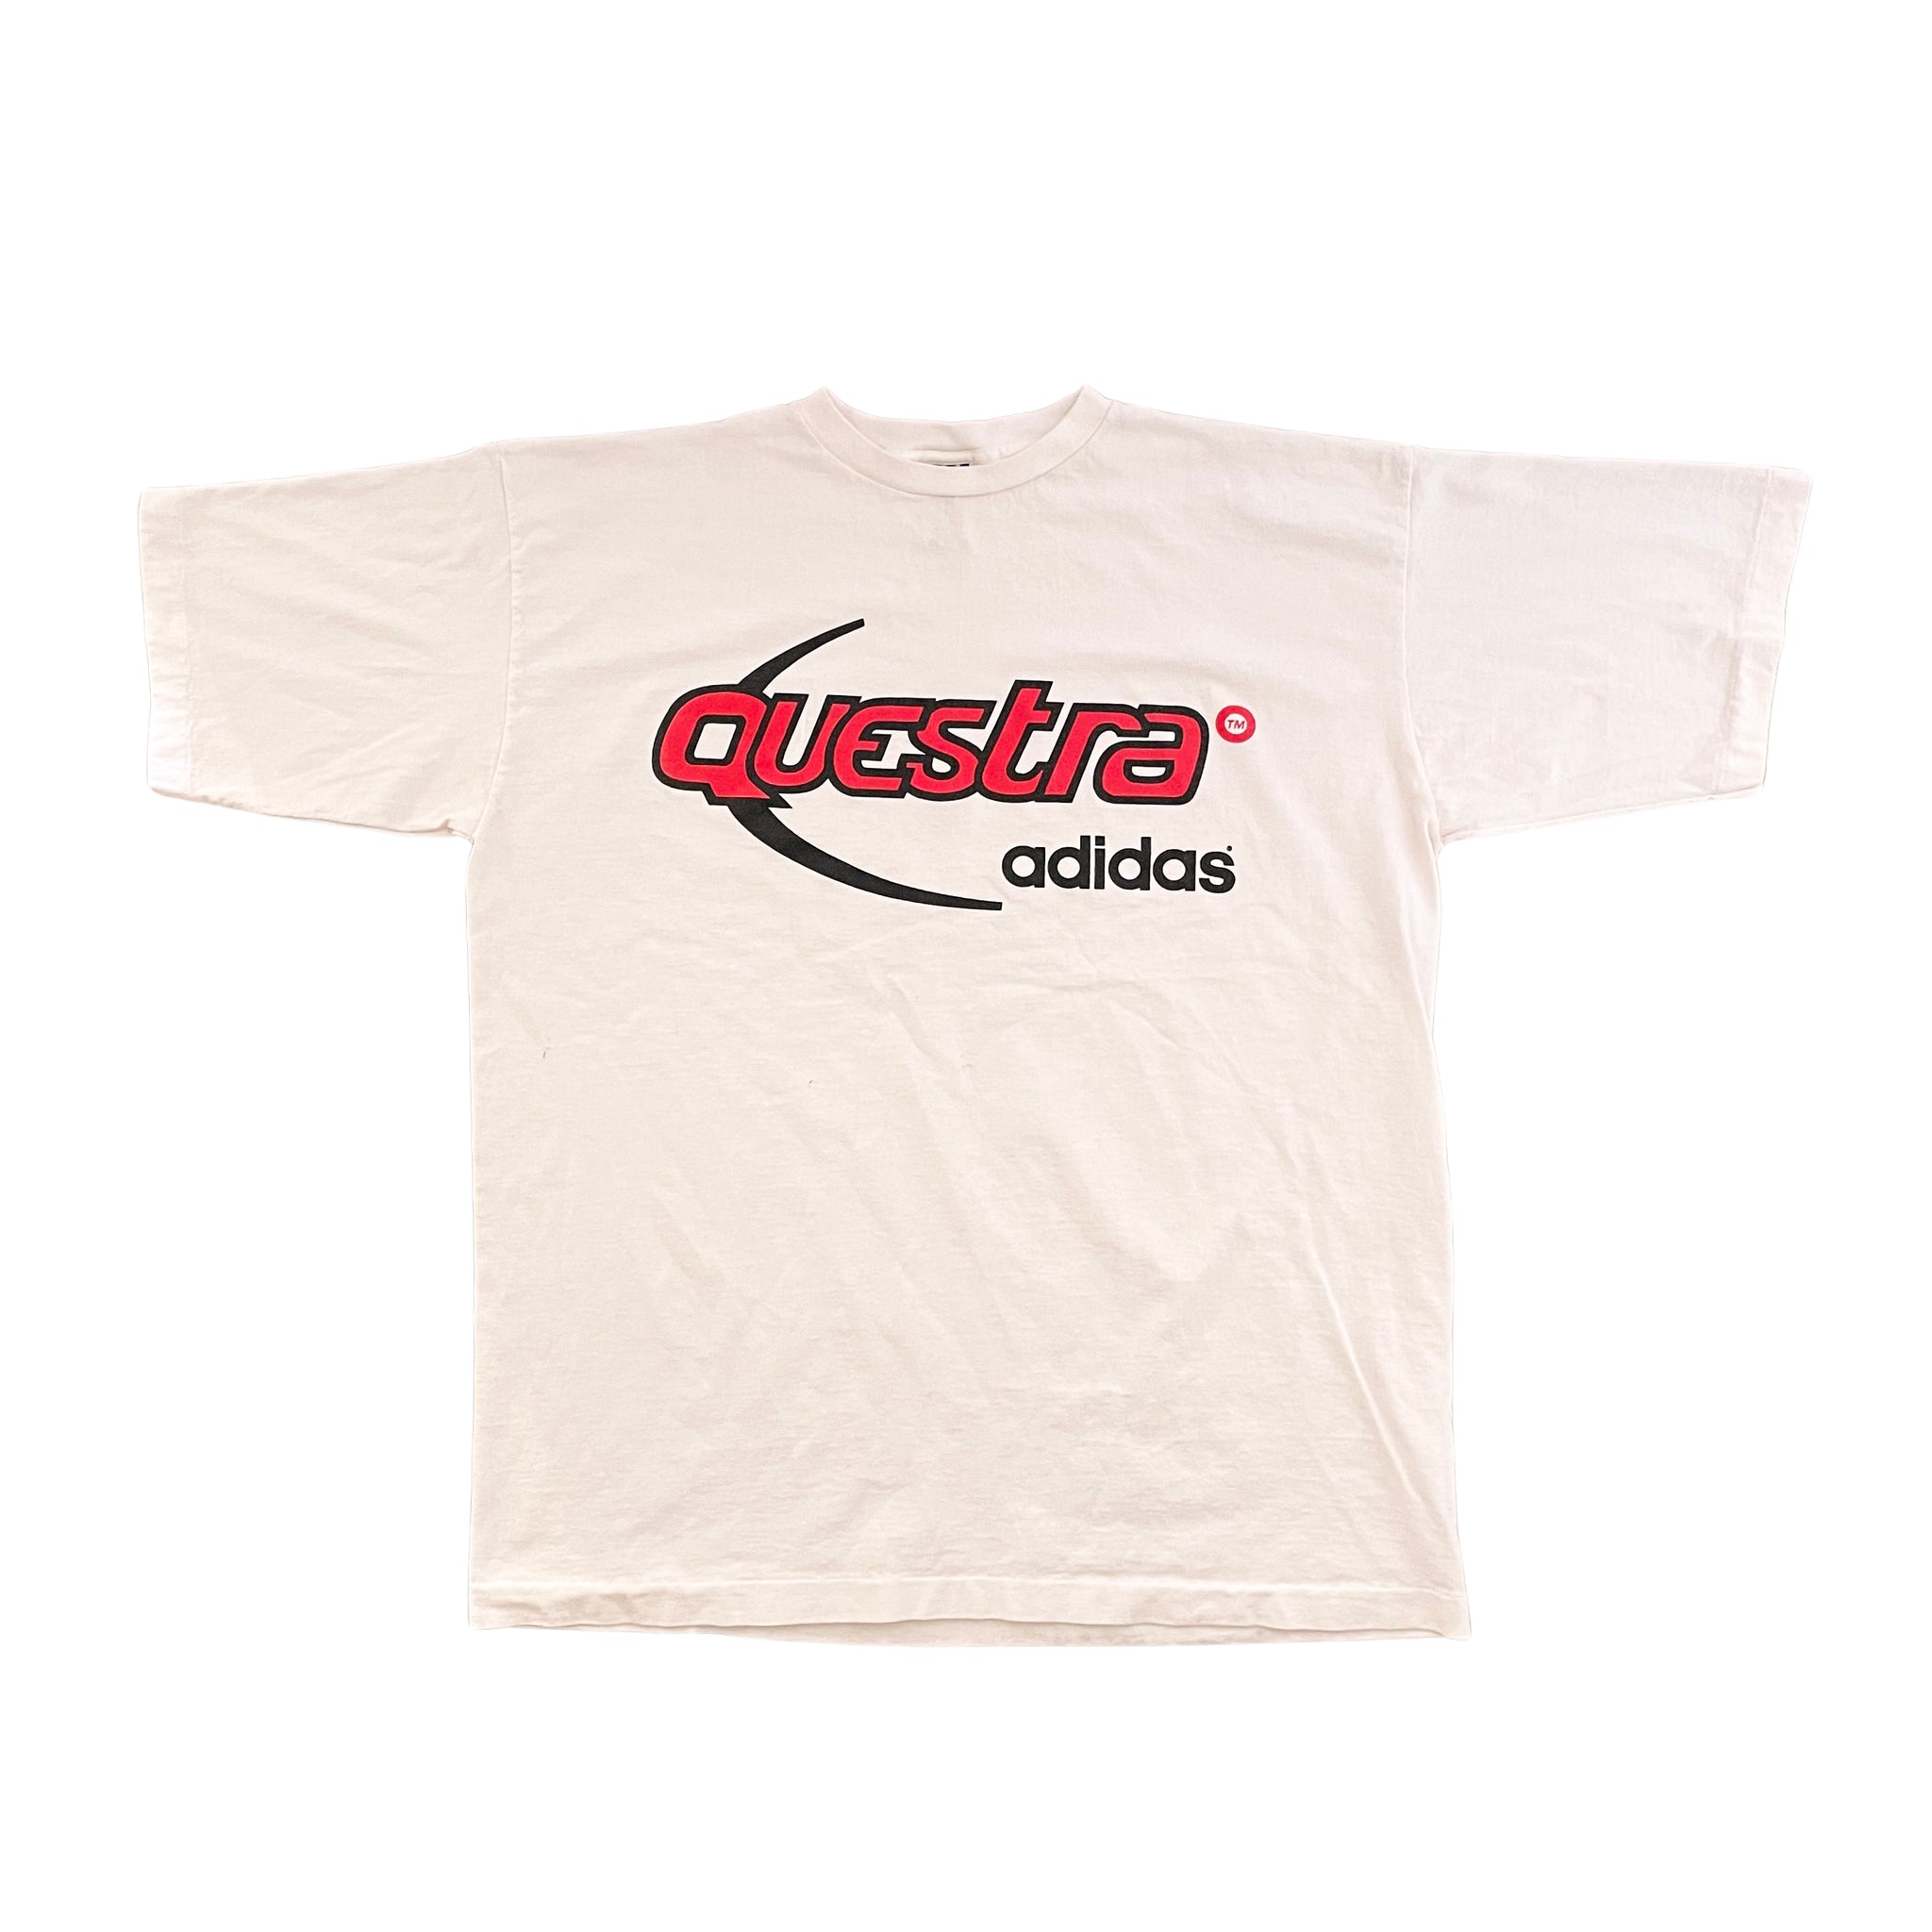 Adidas Questra T-Shirt - XL